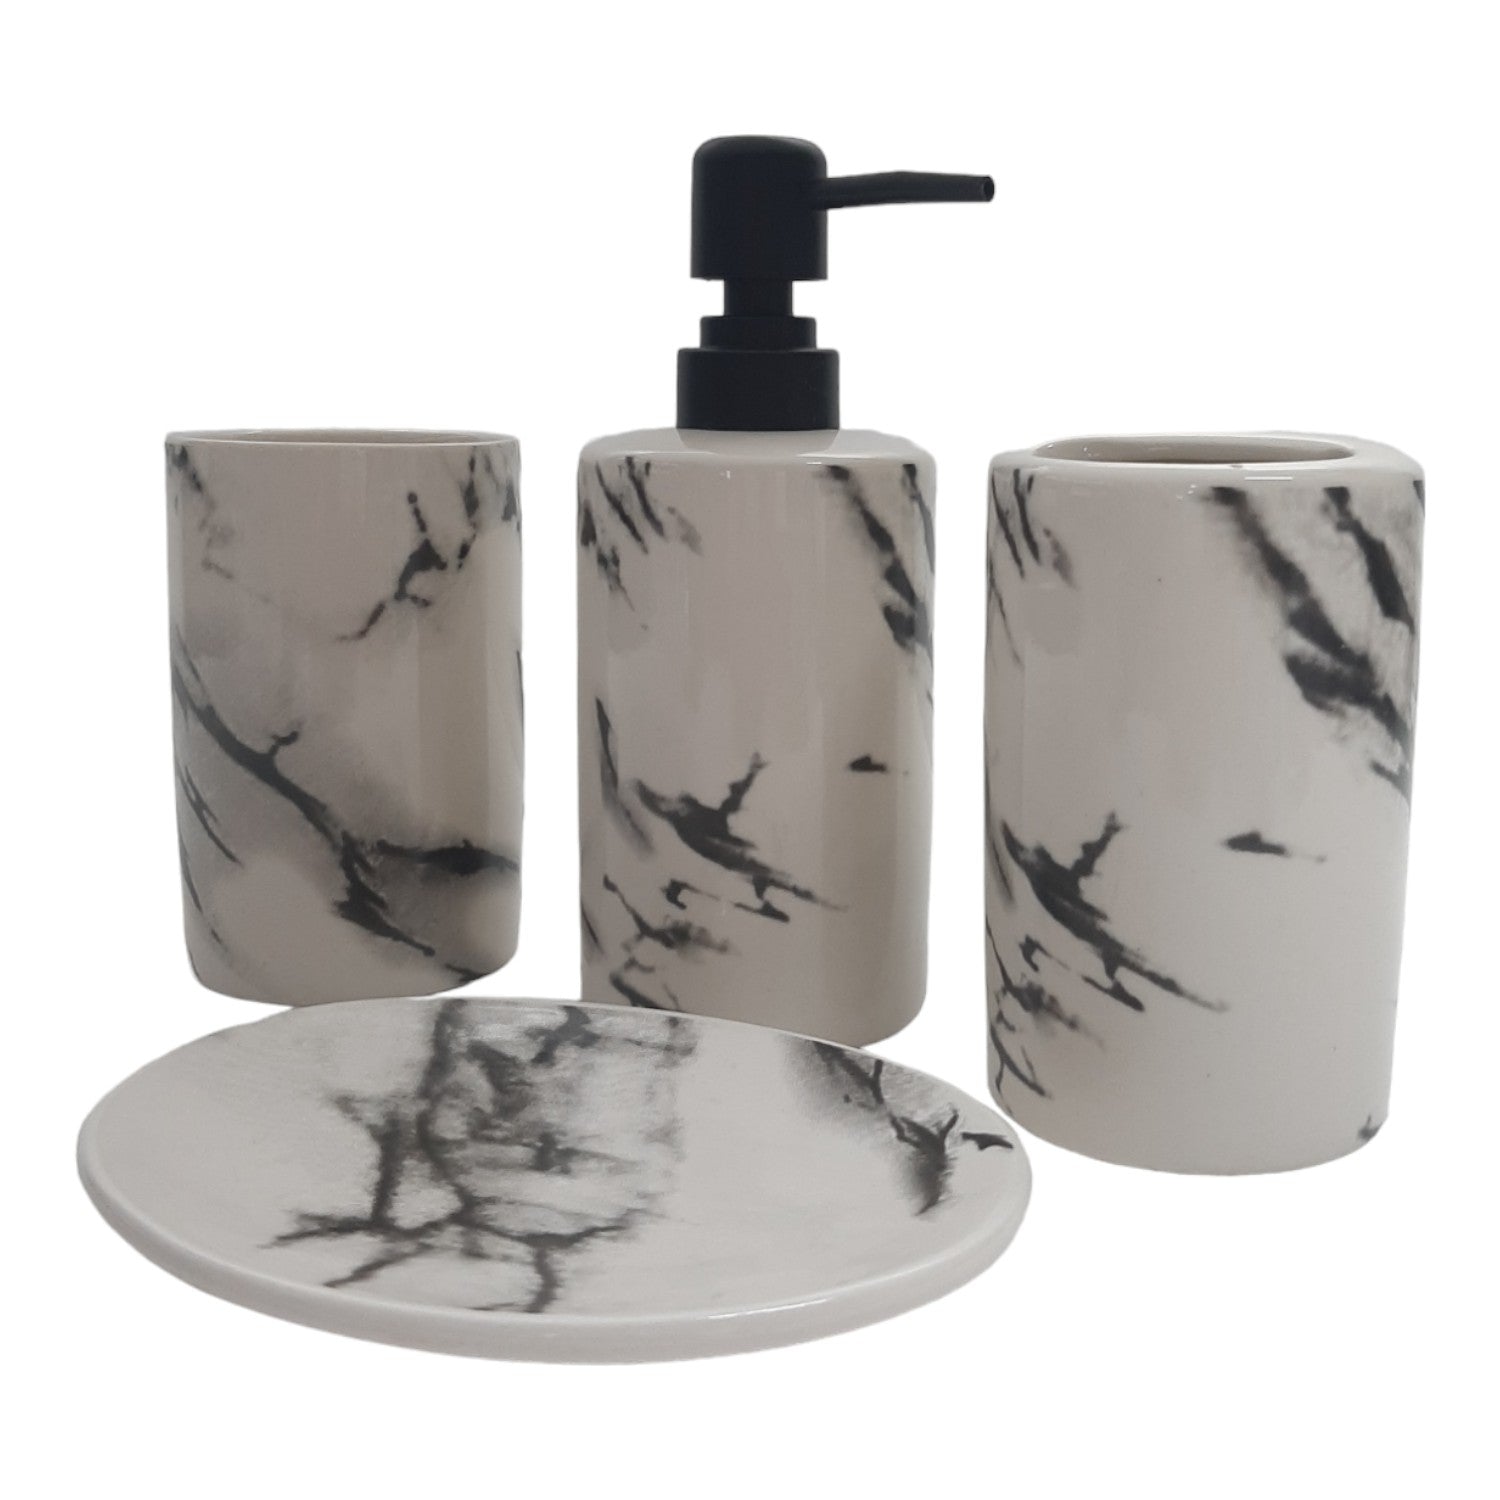 Ceramic Bathroom Set of 4 with Soap Dispenser (10391)